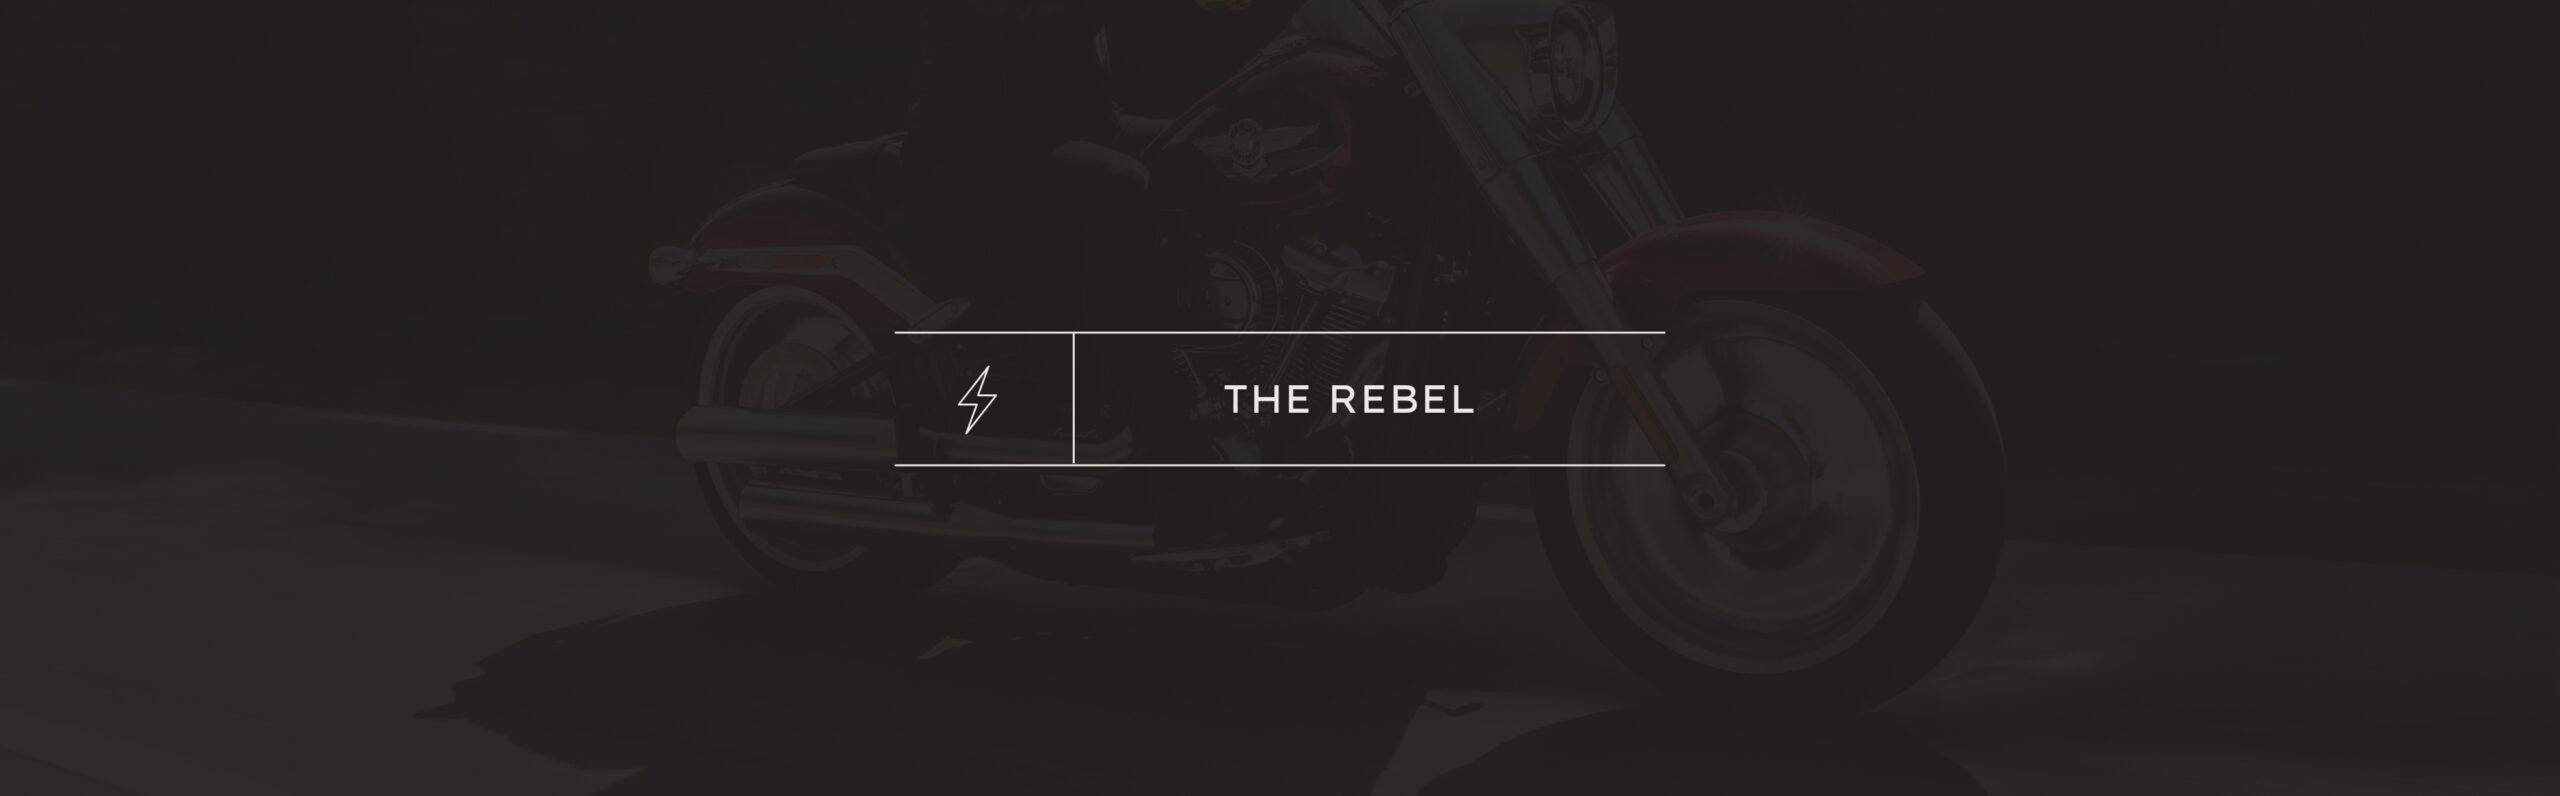 Brand Archetypes: The Rebel